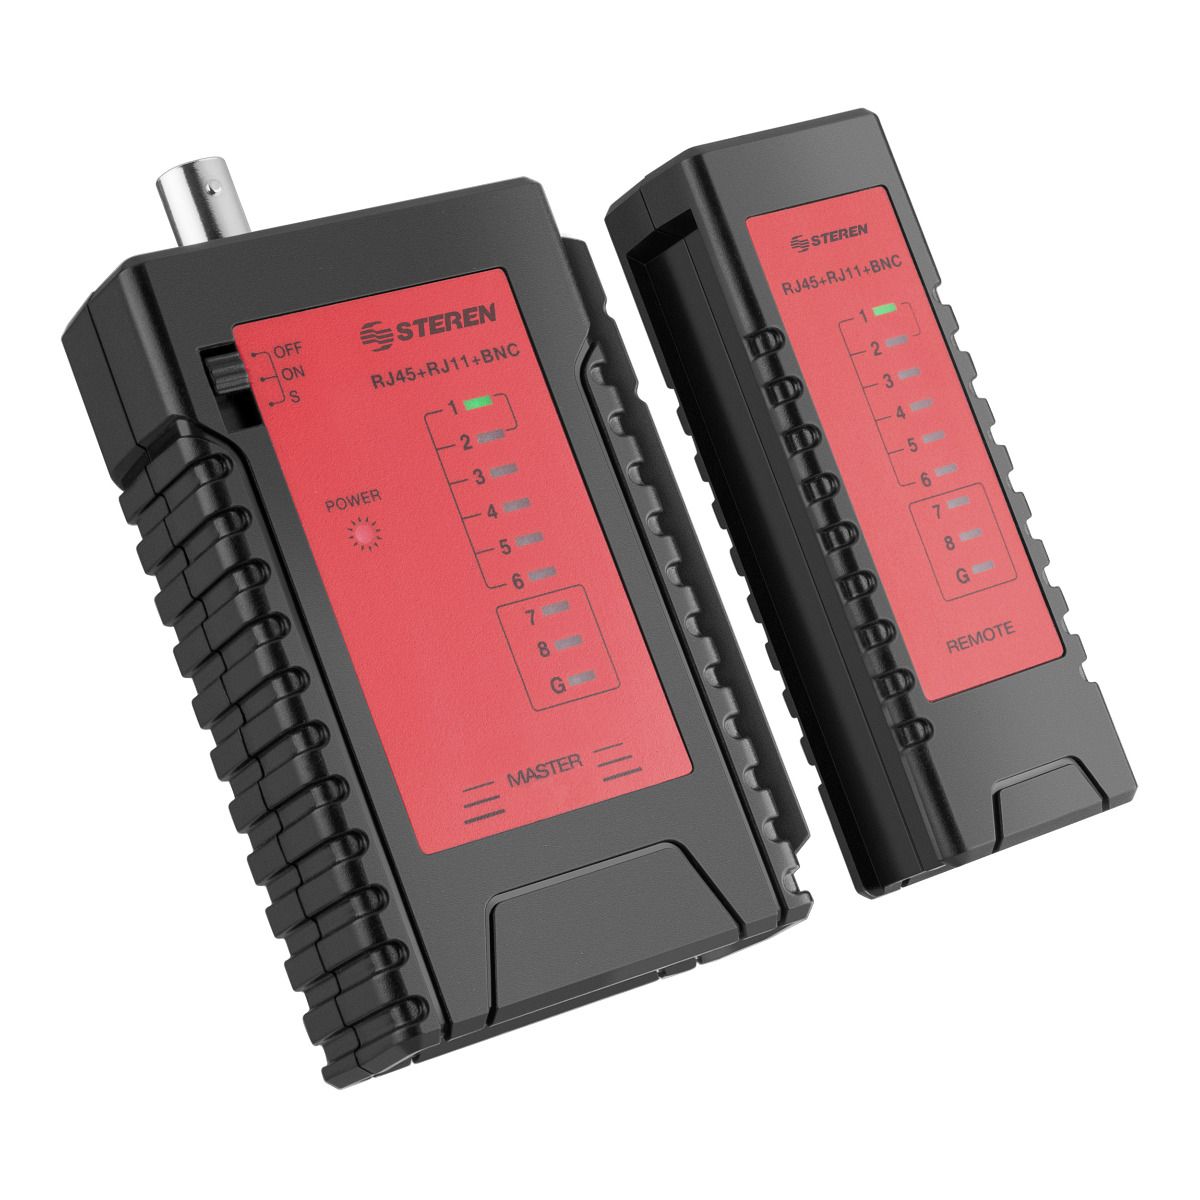 Tester Rj45 Rj11 Probador Cable Red Y Telefónico Utp